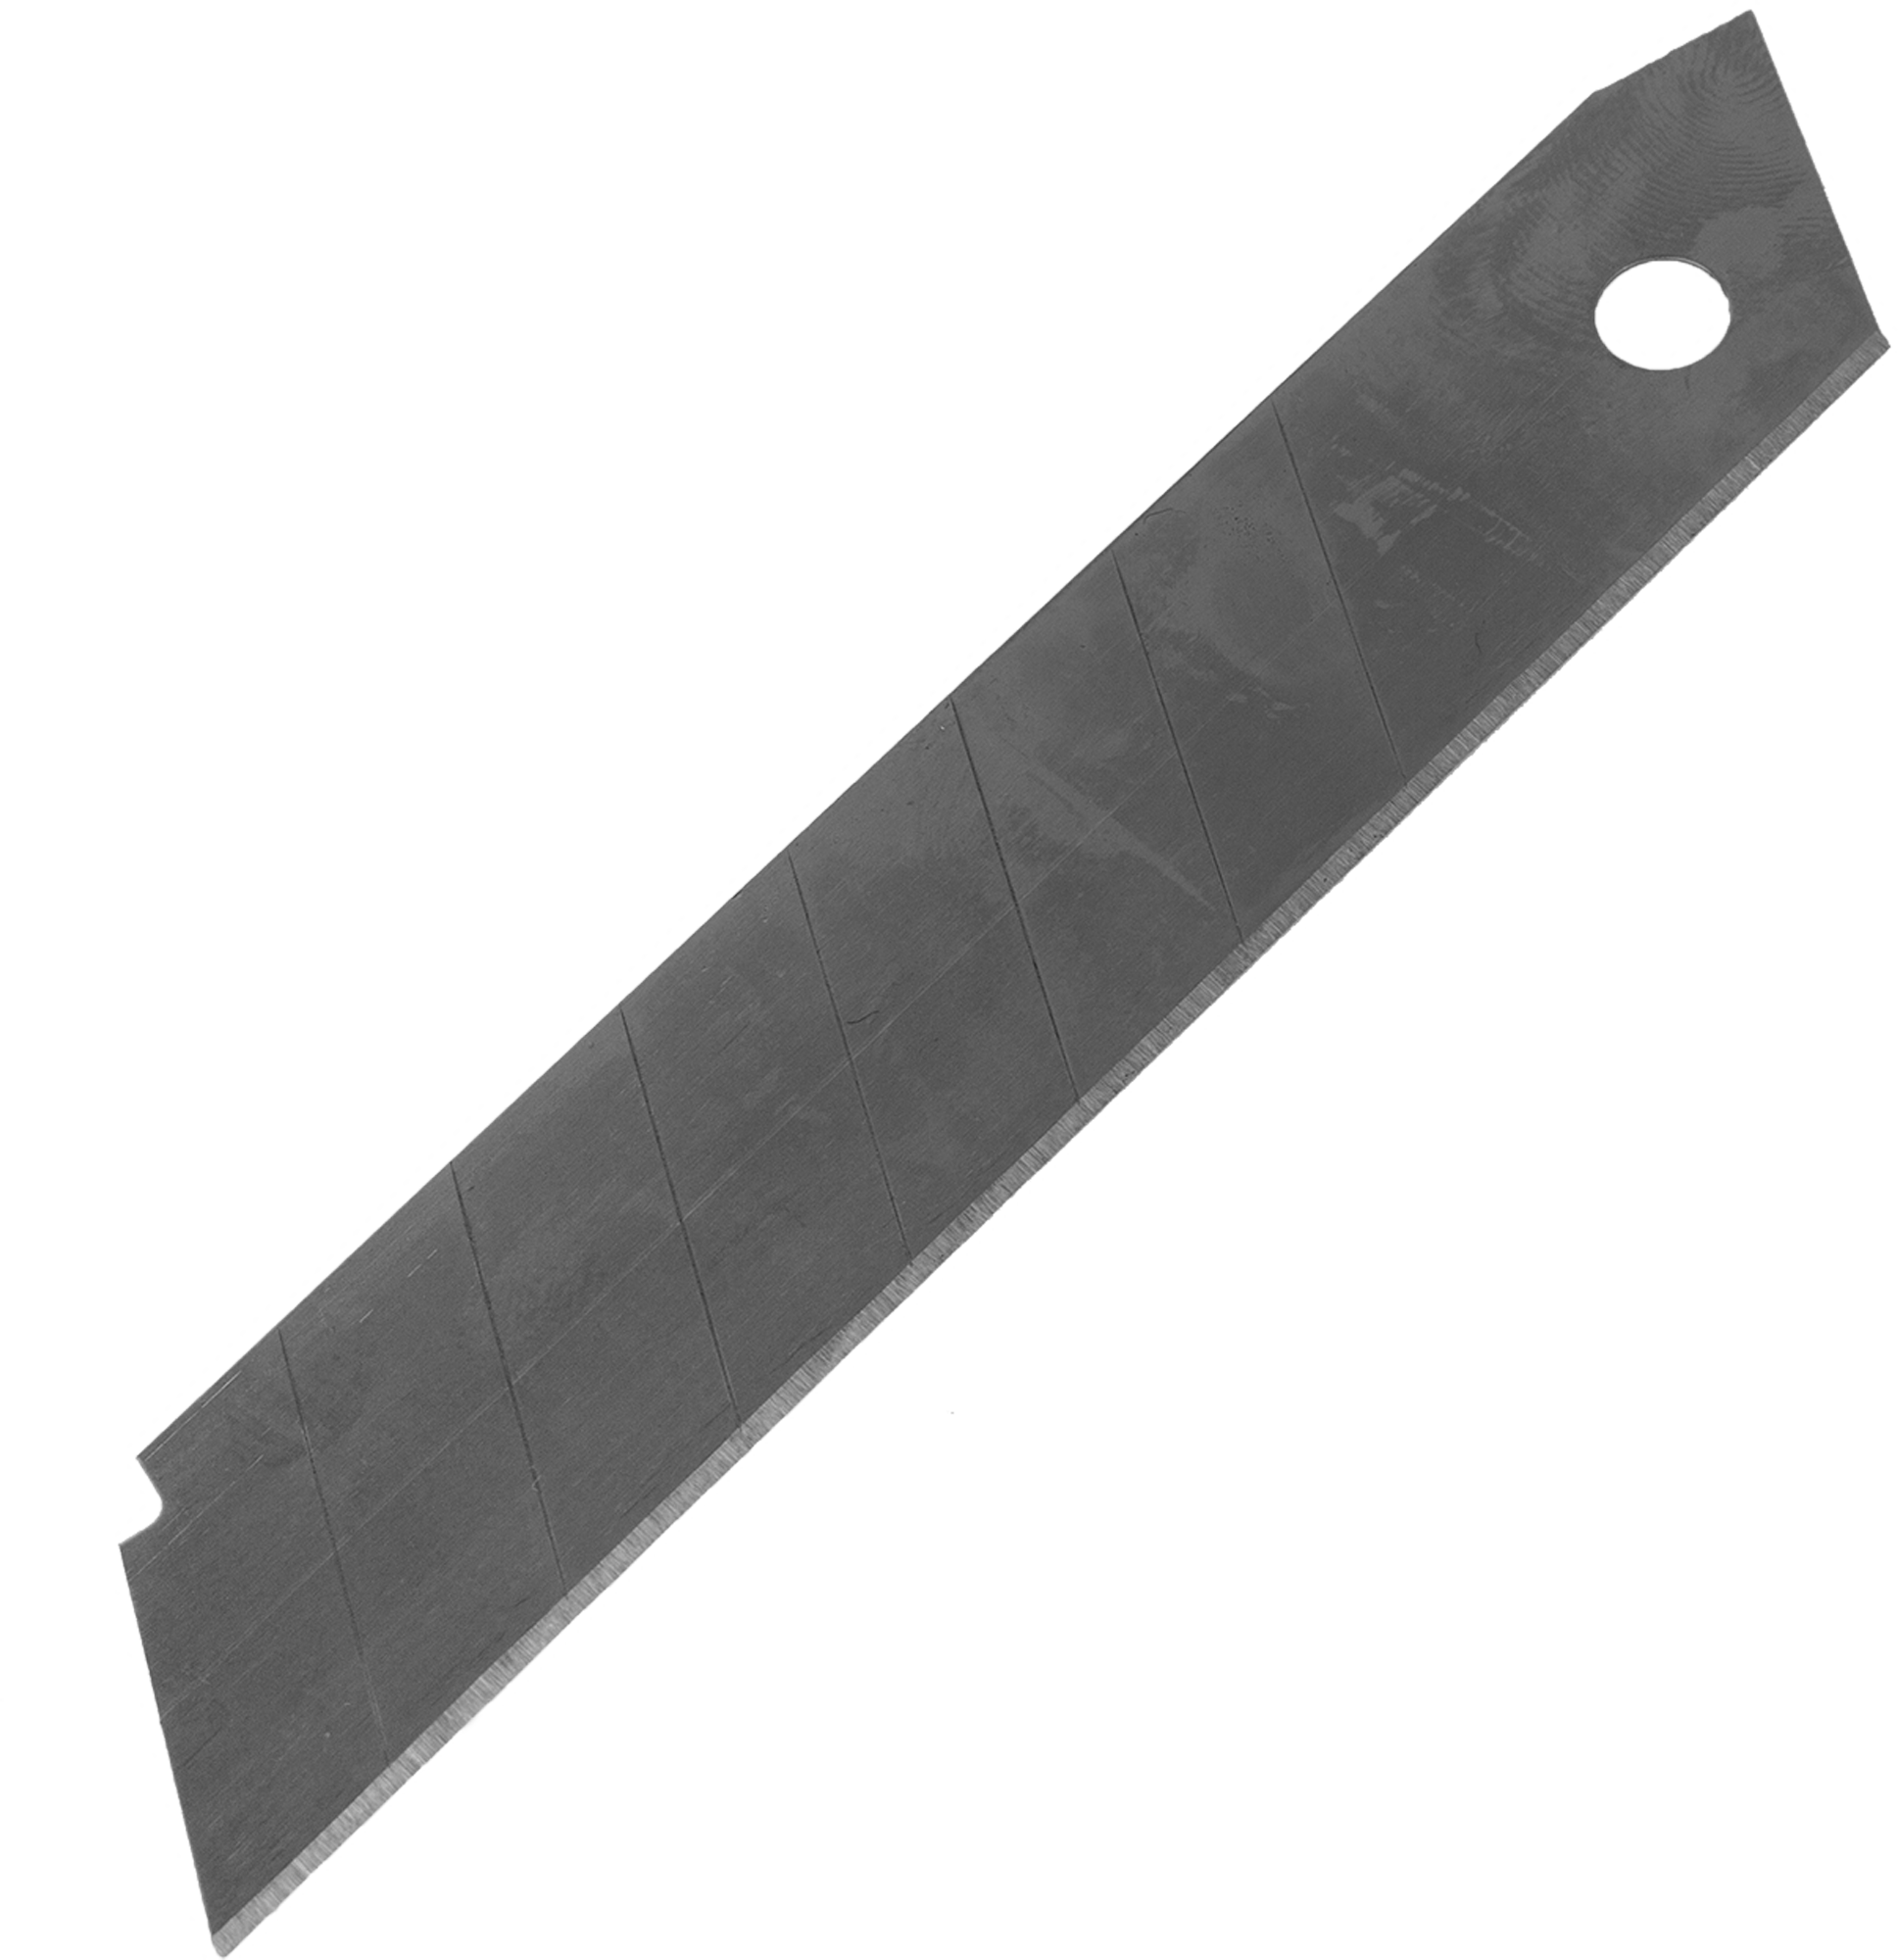 Лезвие для ножа 18мм, 10шт Sparta. Лезвия для ножа Systec 18 мм, 10 шт. Лезвие Sparta 18 мм. Лезвия для ножа 18 мм Sparta. Лезвия для ножа 10 мм